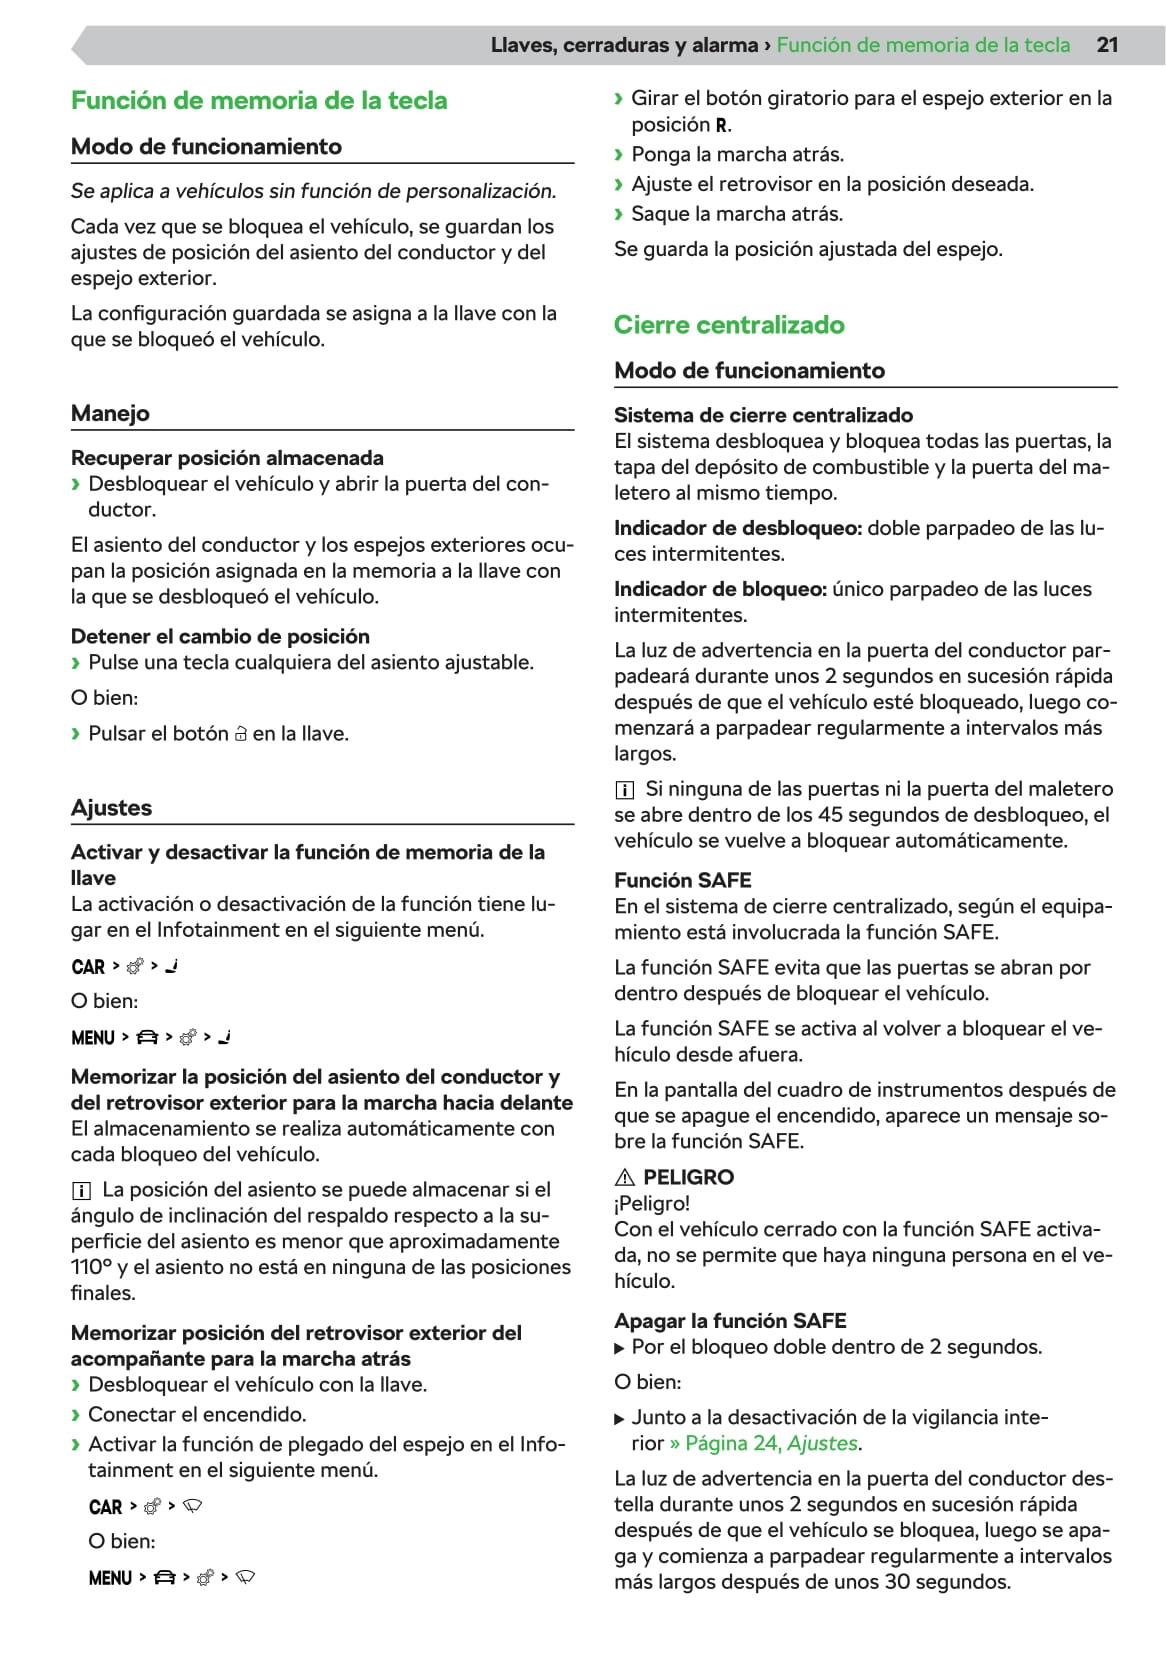 2019-2020 Skoda Superb Owner's Manual | Spanish